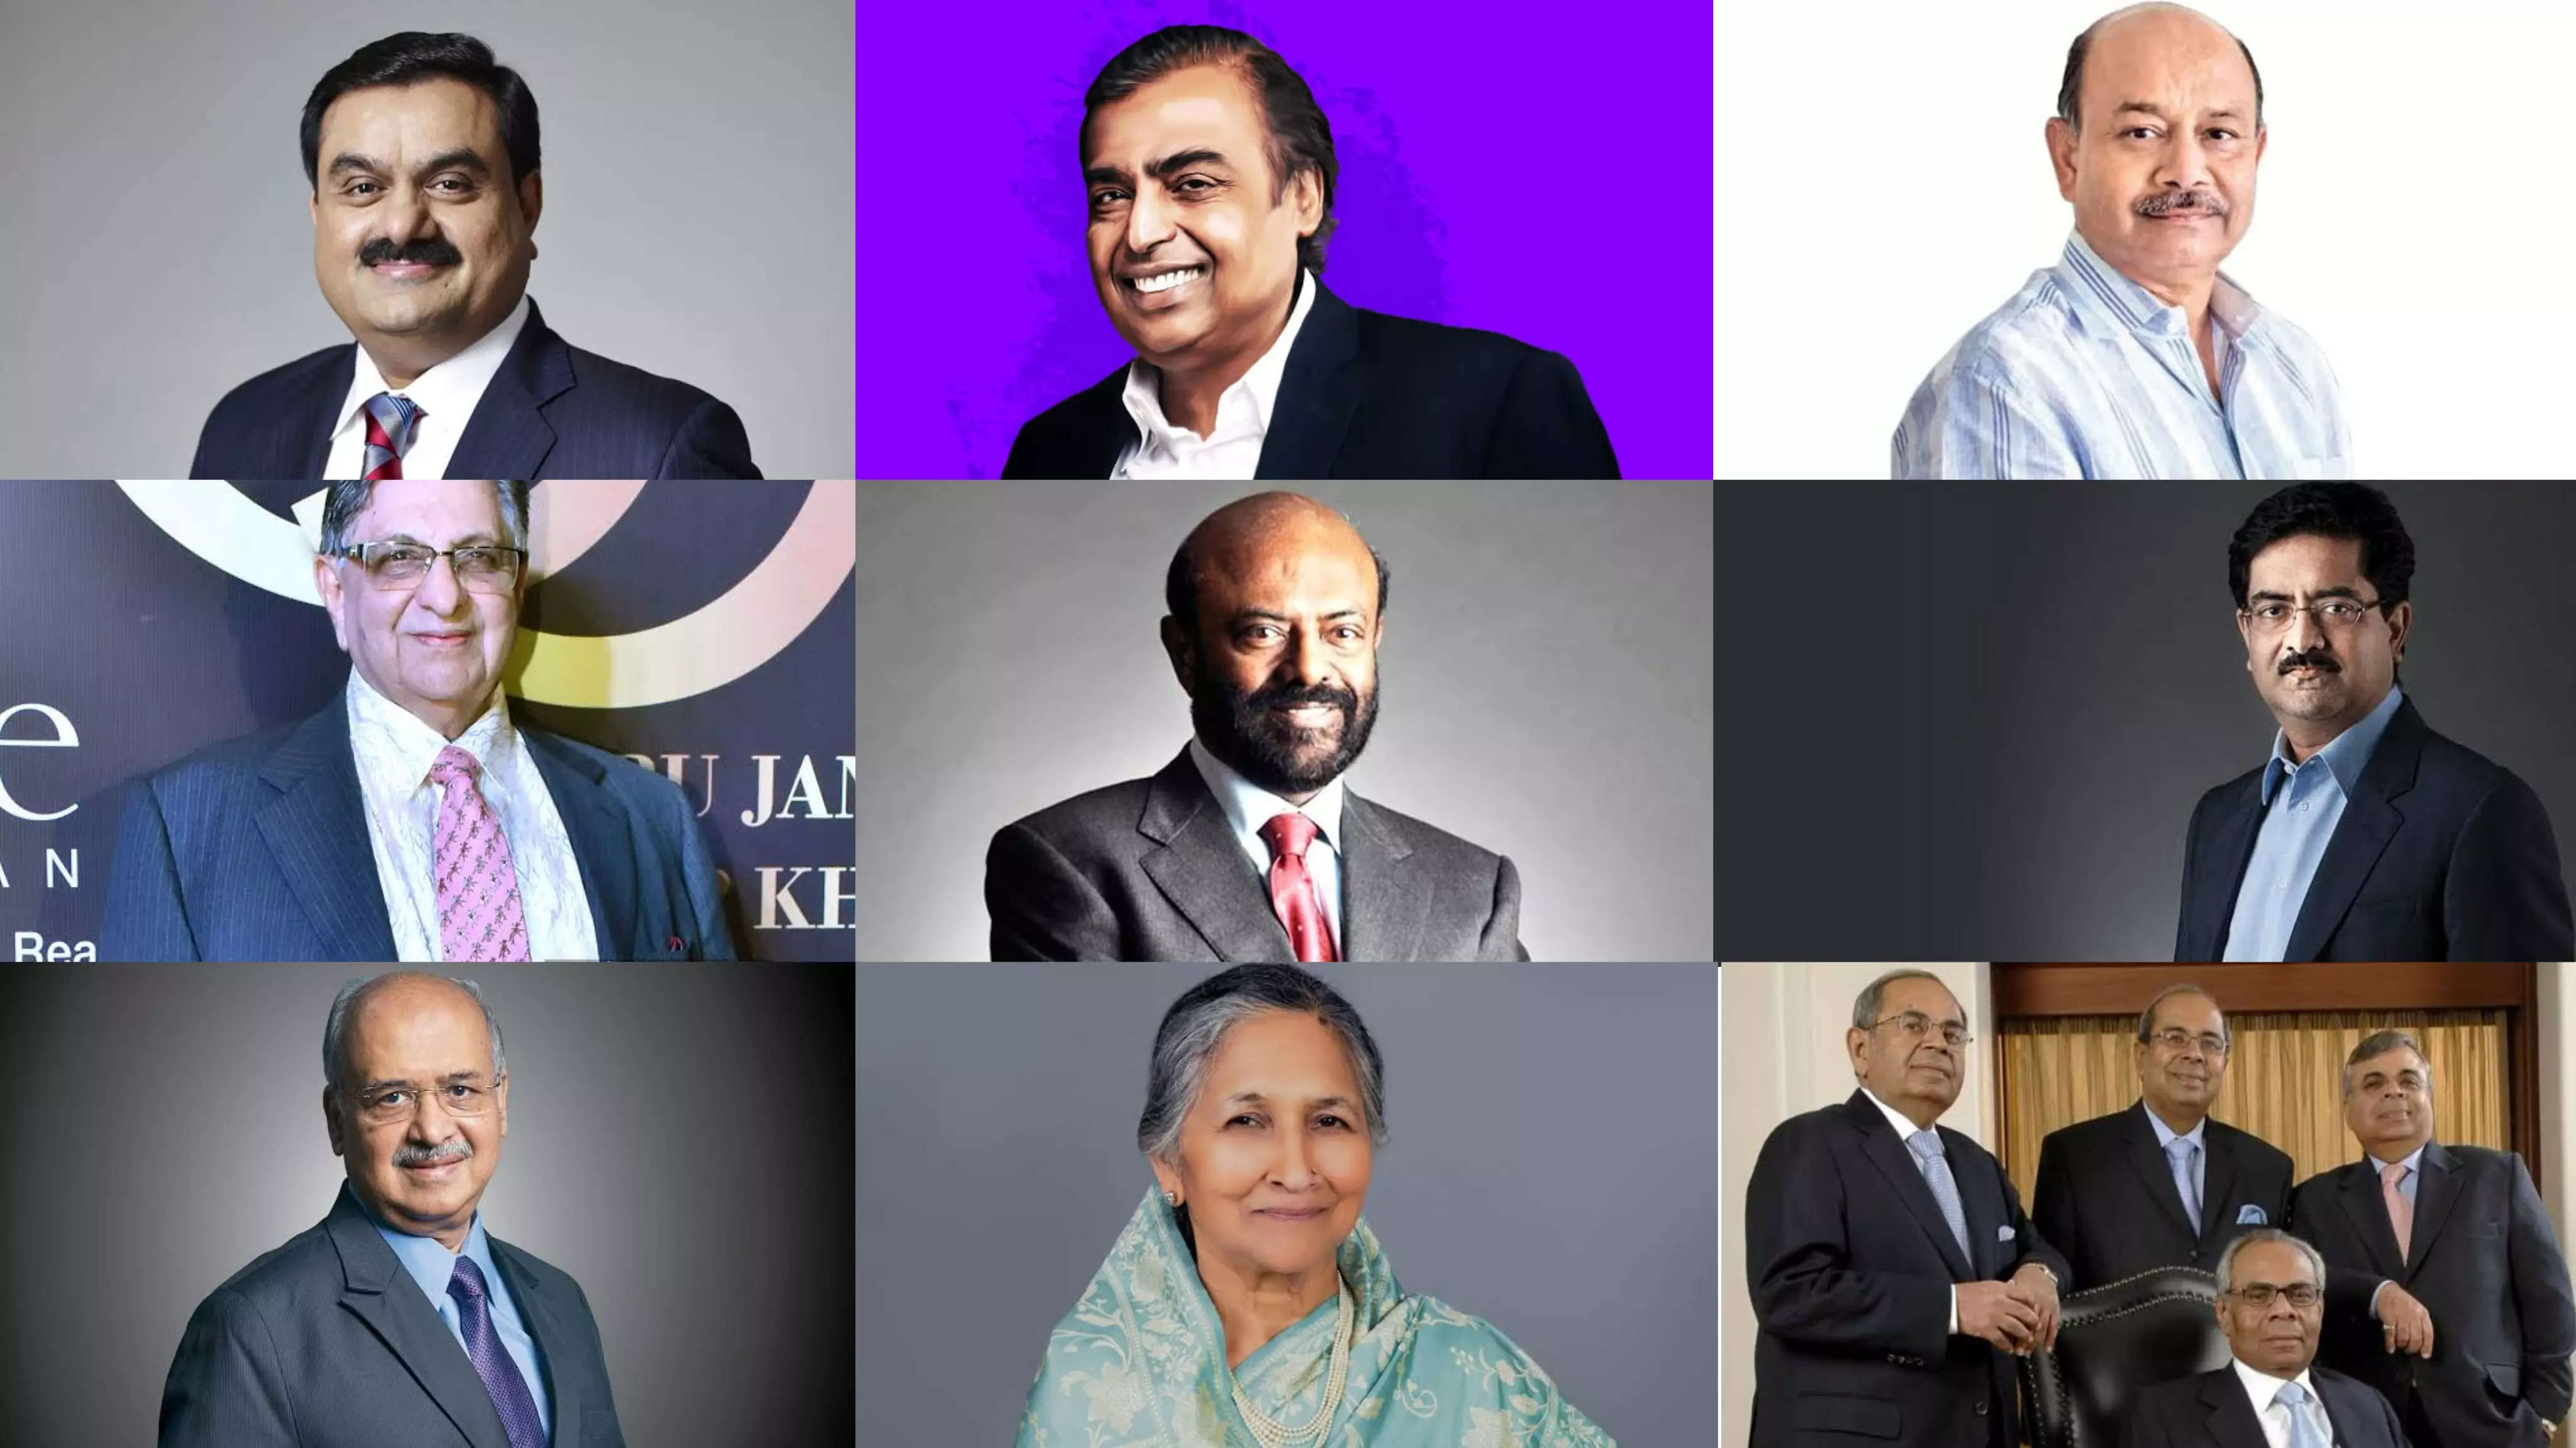 Forbes India Rich List 2021: Mukesh Ambani to Gautam Adani to Cyrus  Poonawalla, top 100 richest Indians 2021 full list